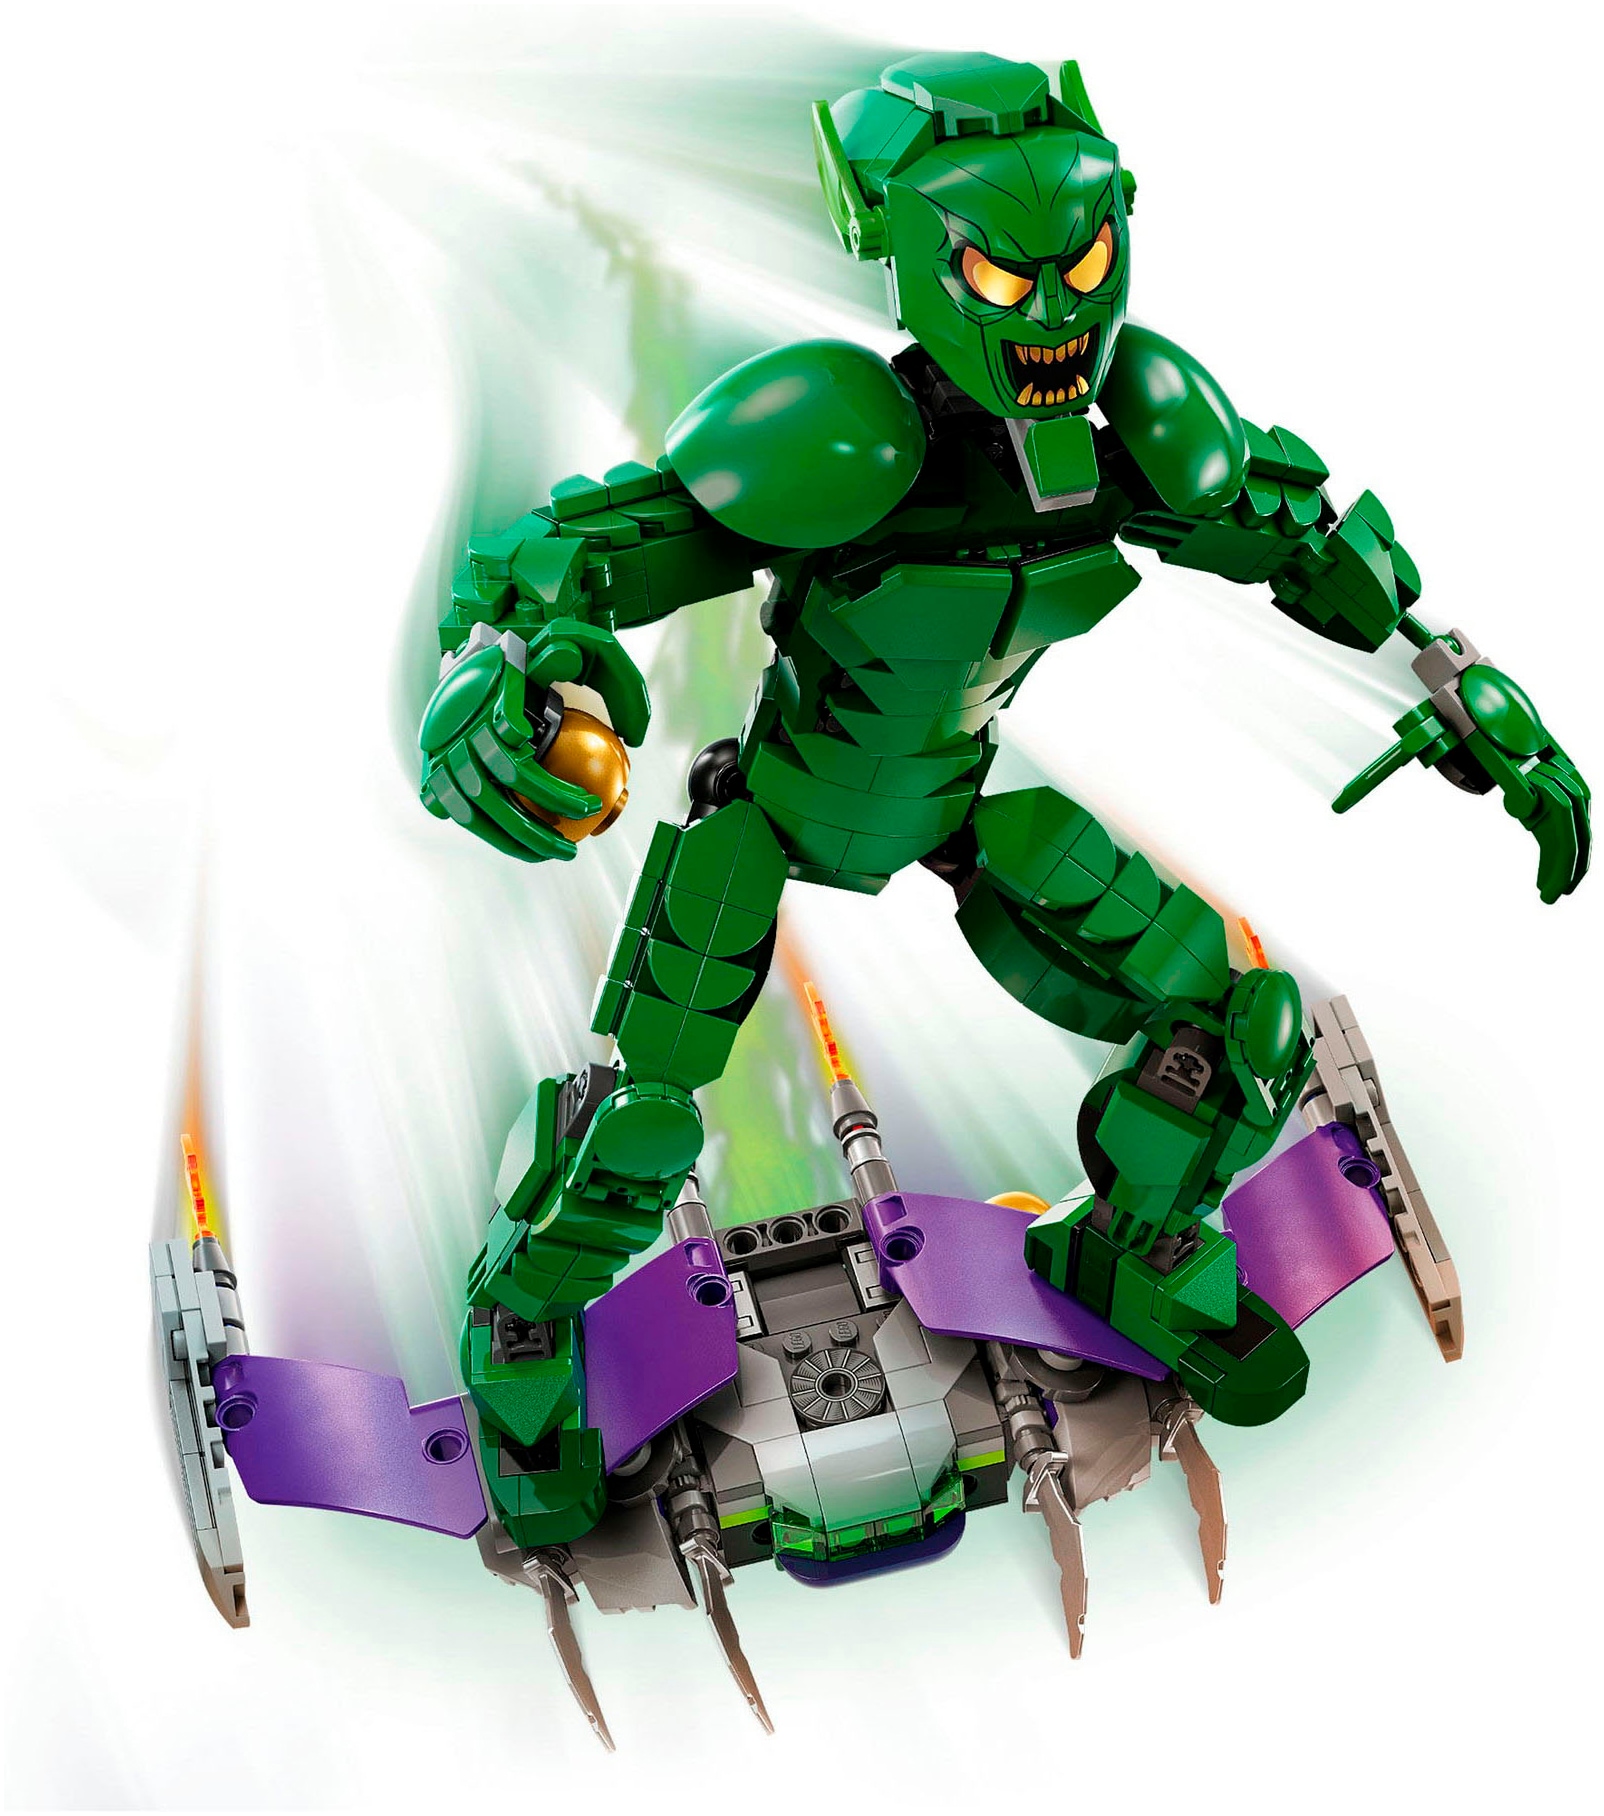 LEGO® Konstruktionsspielsteine »Green Goblin Baufigur (76284), LEGO Super Heroes«, (471 St.), Made in Europe